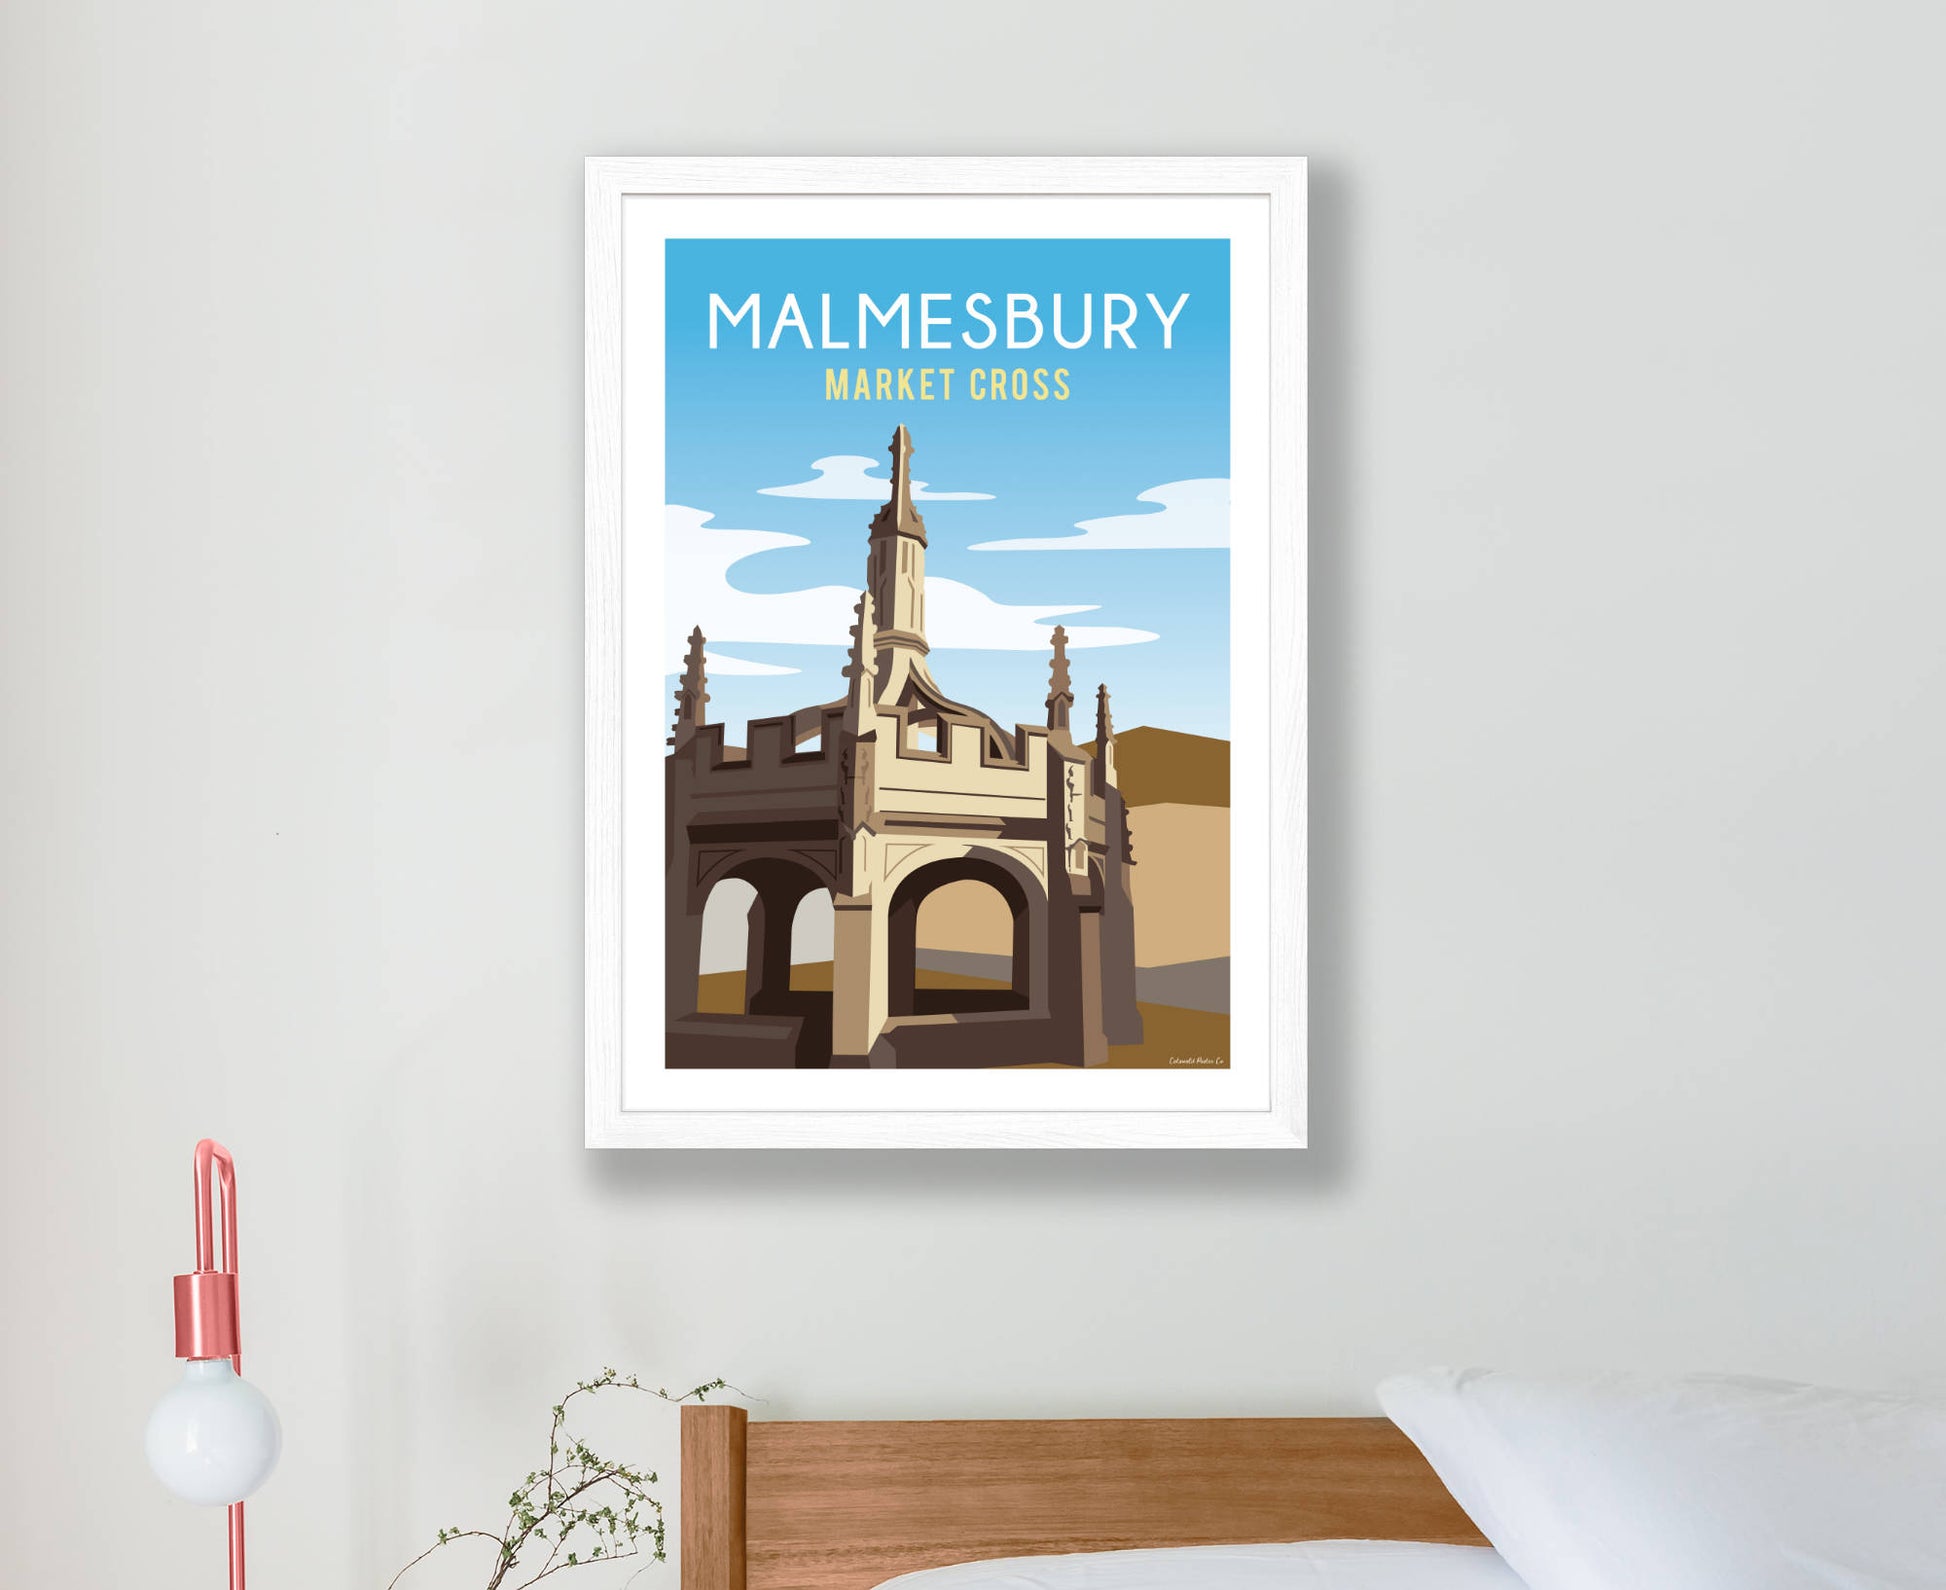 Malmesbury Market Cross Poster in white frame